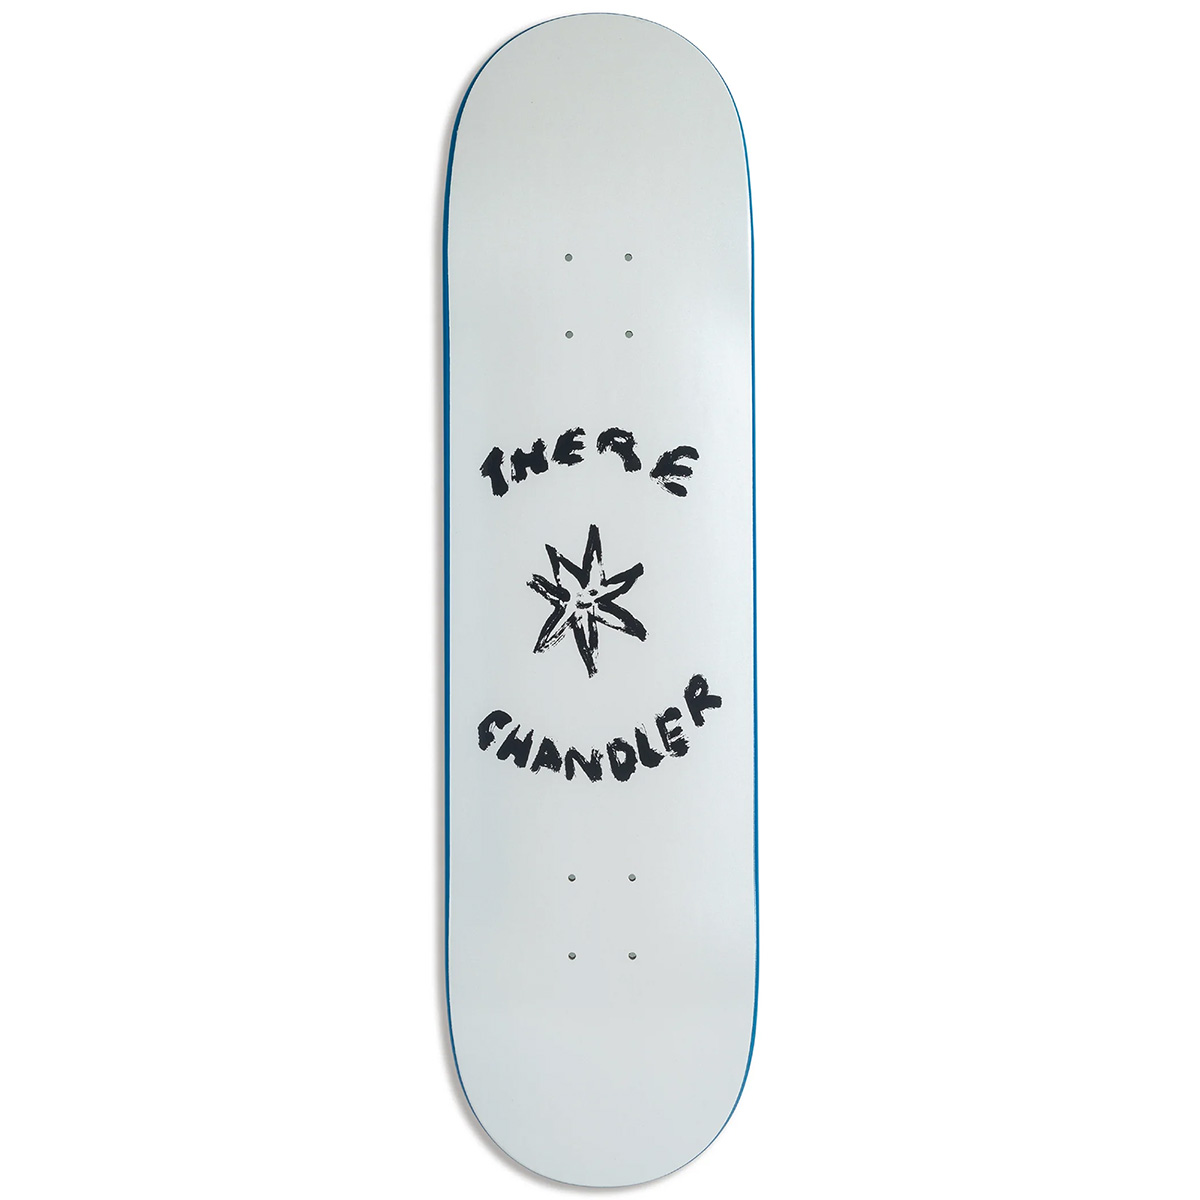 There Chandler Starlight Skateboard Deck 8.5